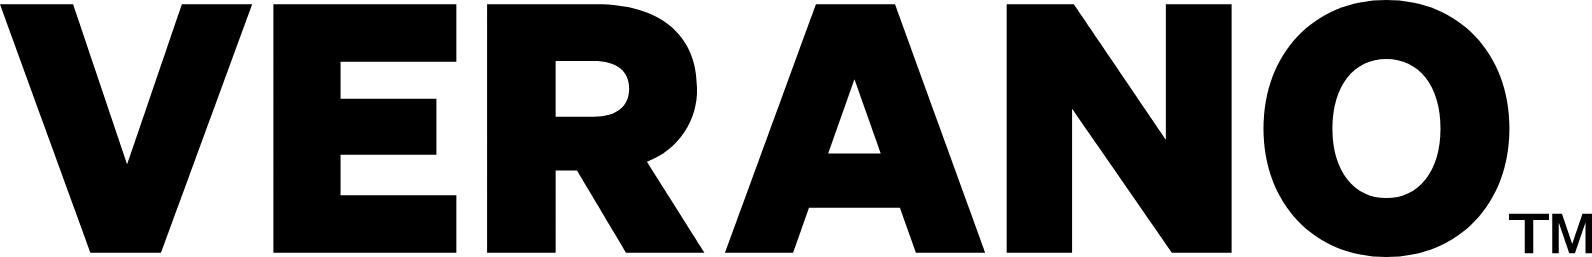 Verano Holdings logo large (transparent PNG)